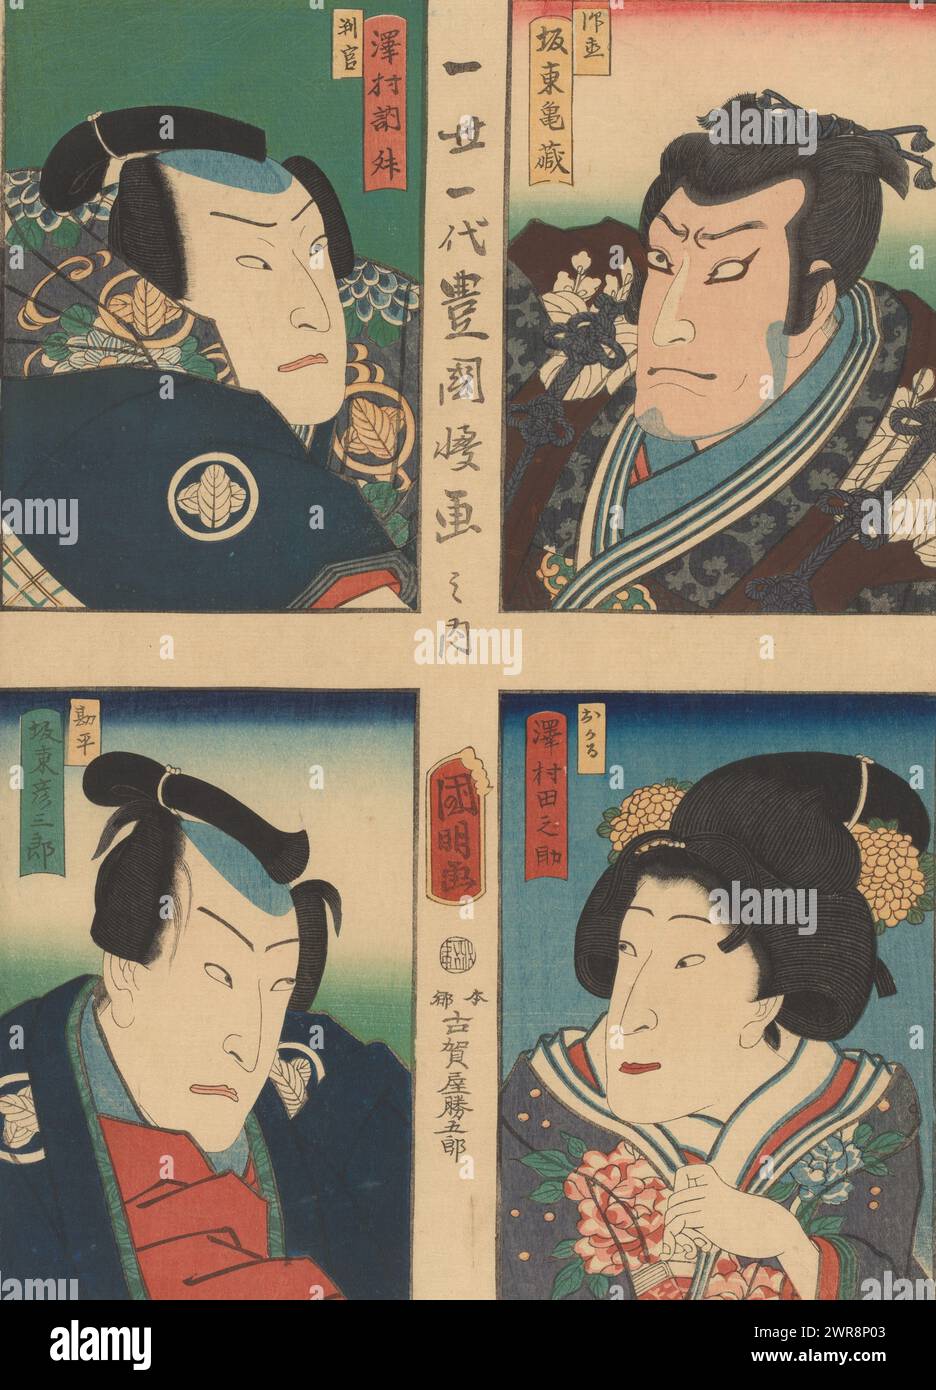 Four portraits of kabuki actors, The storehouse of loyal retainers, Four portraits of kabuki actors in roles from the play Kanadehon chûshigura. Top left: Kabuki actor Sawamura Tosshô II in the role of Enya Hangan; top right: Bandô Kamezô as Kô no Moronao; bottom left: Bandô Hikosaburô V as Hayano Kanpei; bottom right: Sawamura Tanosuke III as Okaru., print maker: Kuniaki (II), Utagawa, Ôta Masukichi, publisher: Kogaya Katsugoro, Japan, May-1862, paper, color woodcut, height 358 mm × width 243 mm, print Stock Photo